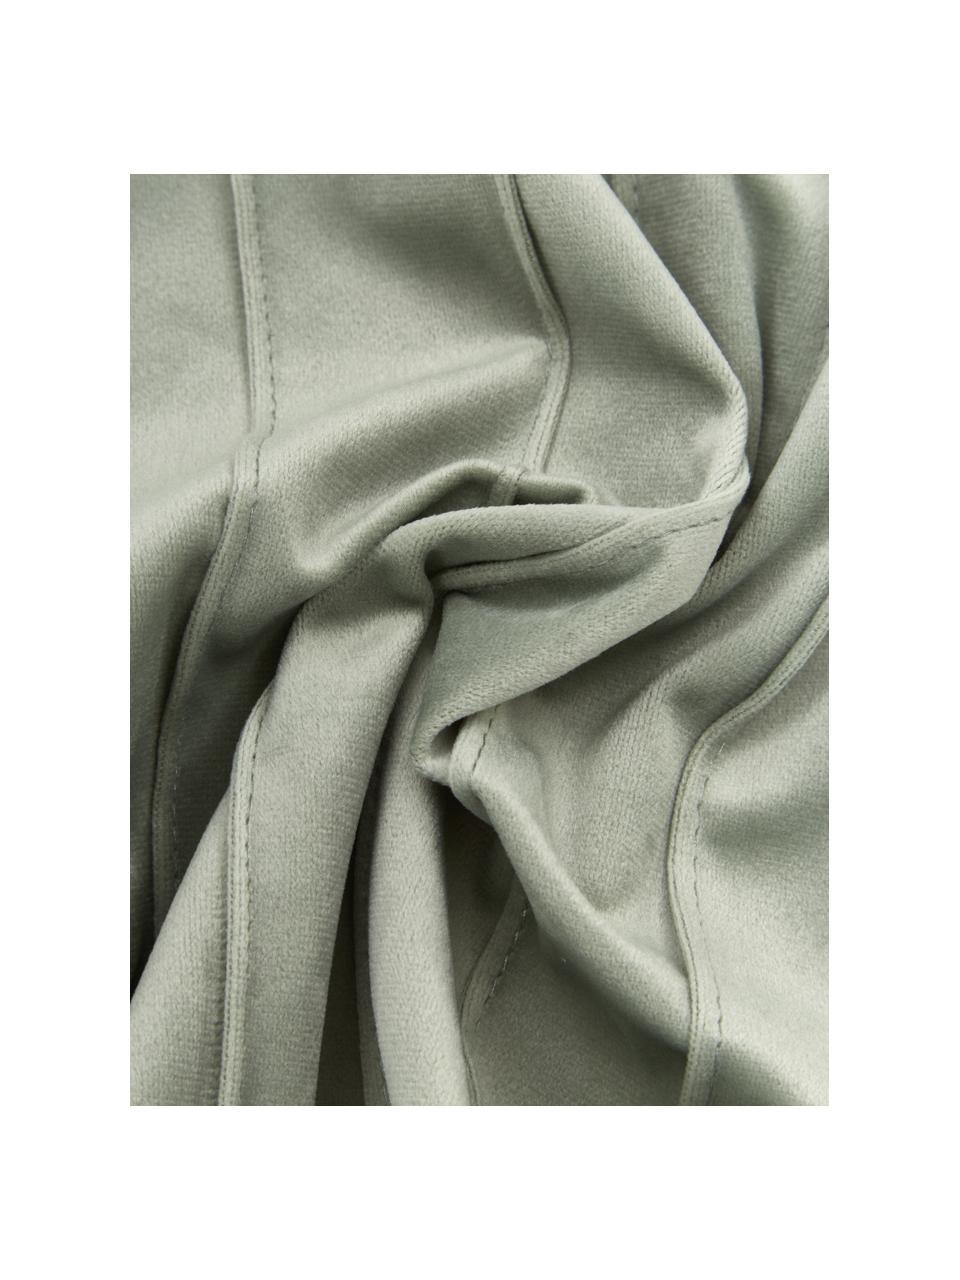 Fluwelen kussenhoes Lola in saliegroen met structuurpatroon, Fluweel (100% polyester), Saliegroen, B 30 x L 50 cm